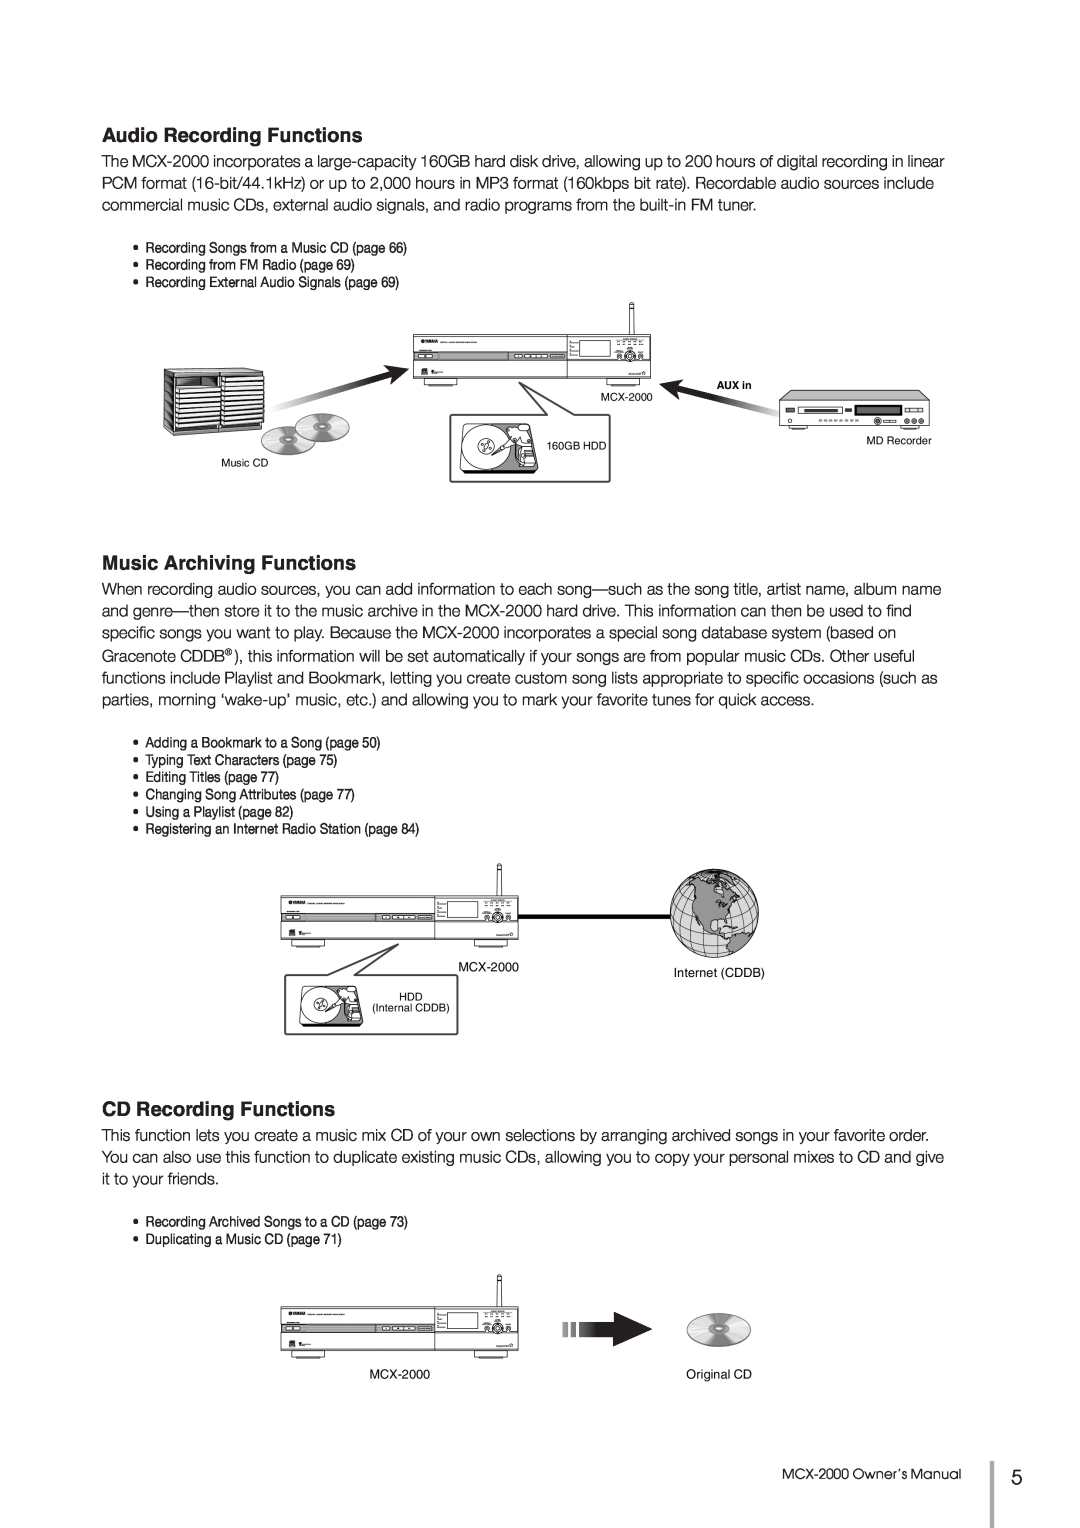 Yamaha MCX-2000 setup guide Audio Recording Functions, Music Archiving Functions, CD Recording Functions 